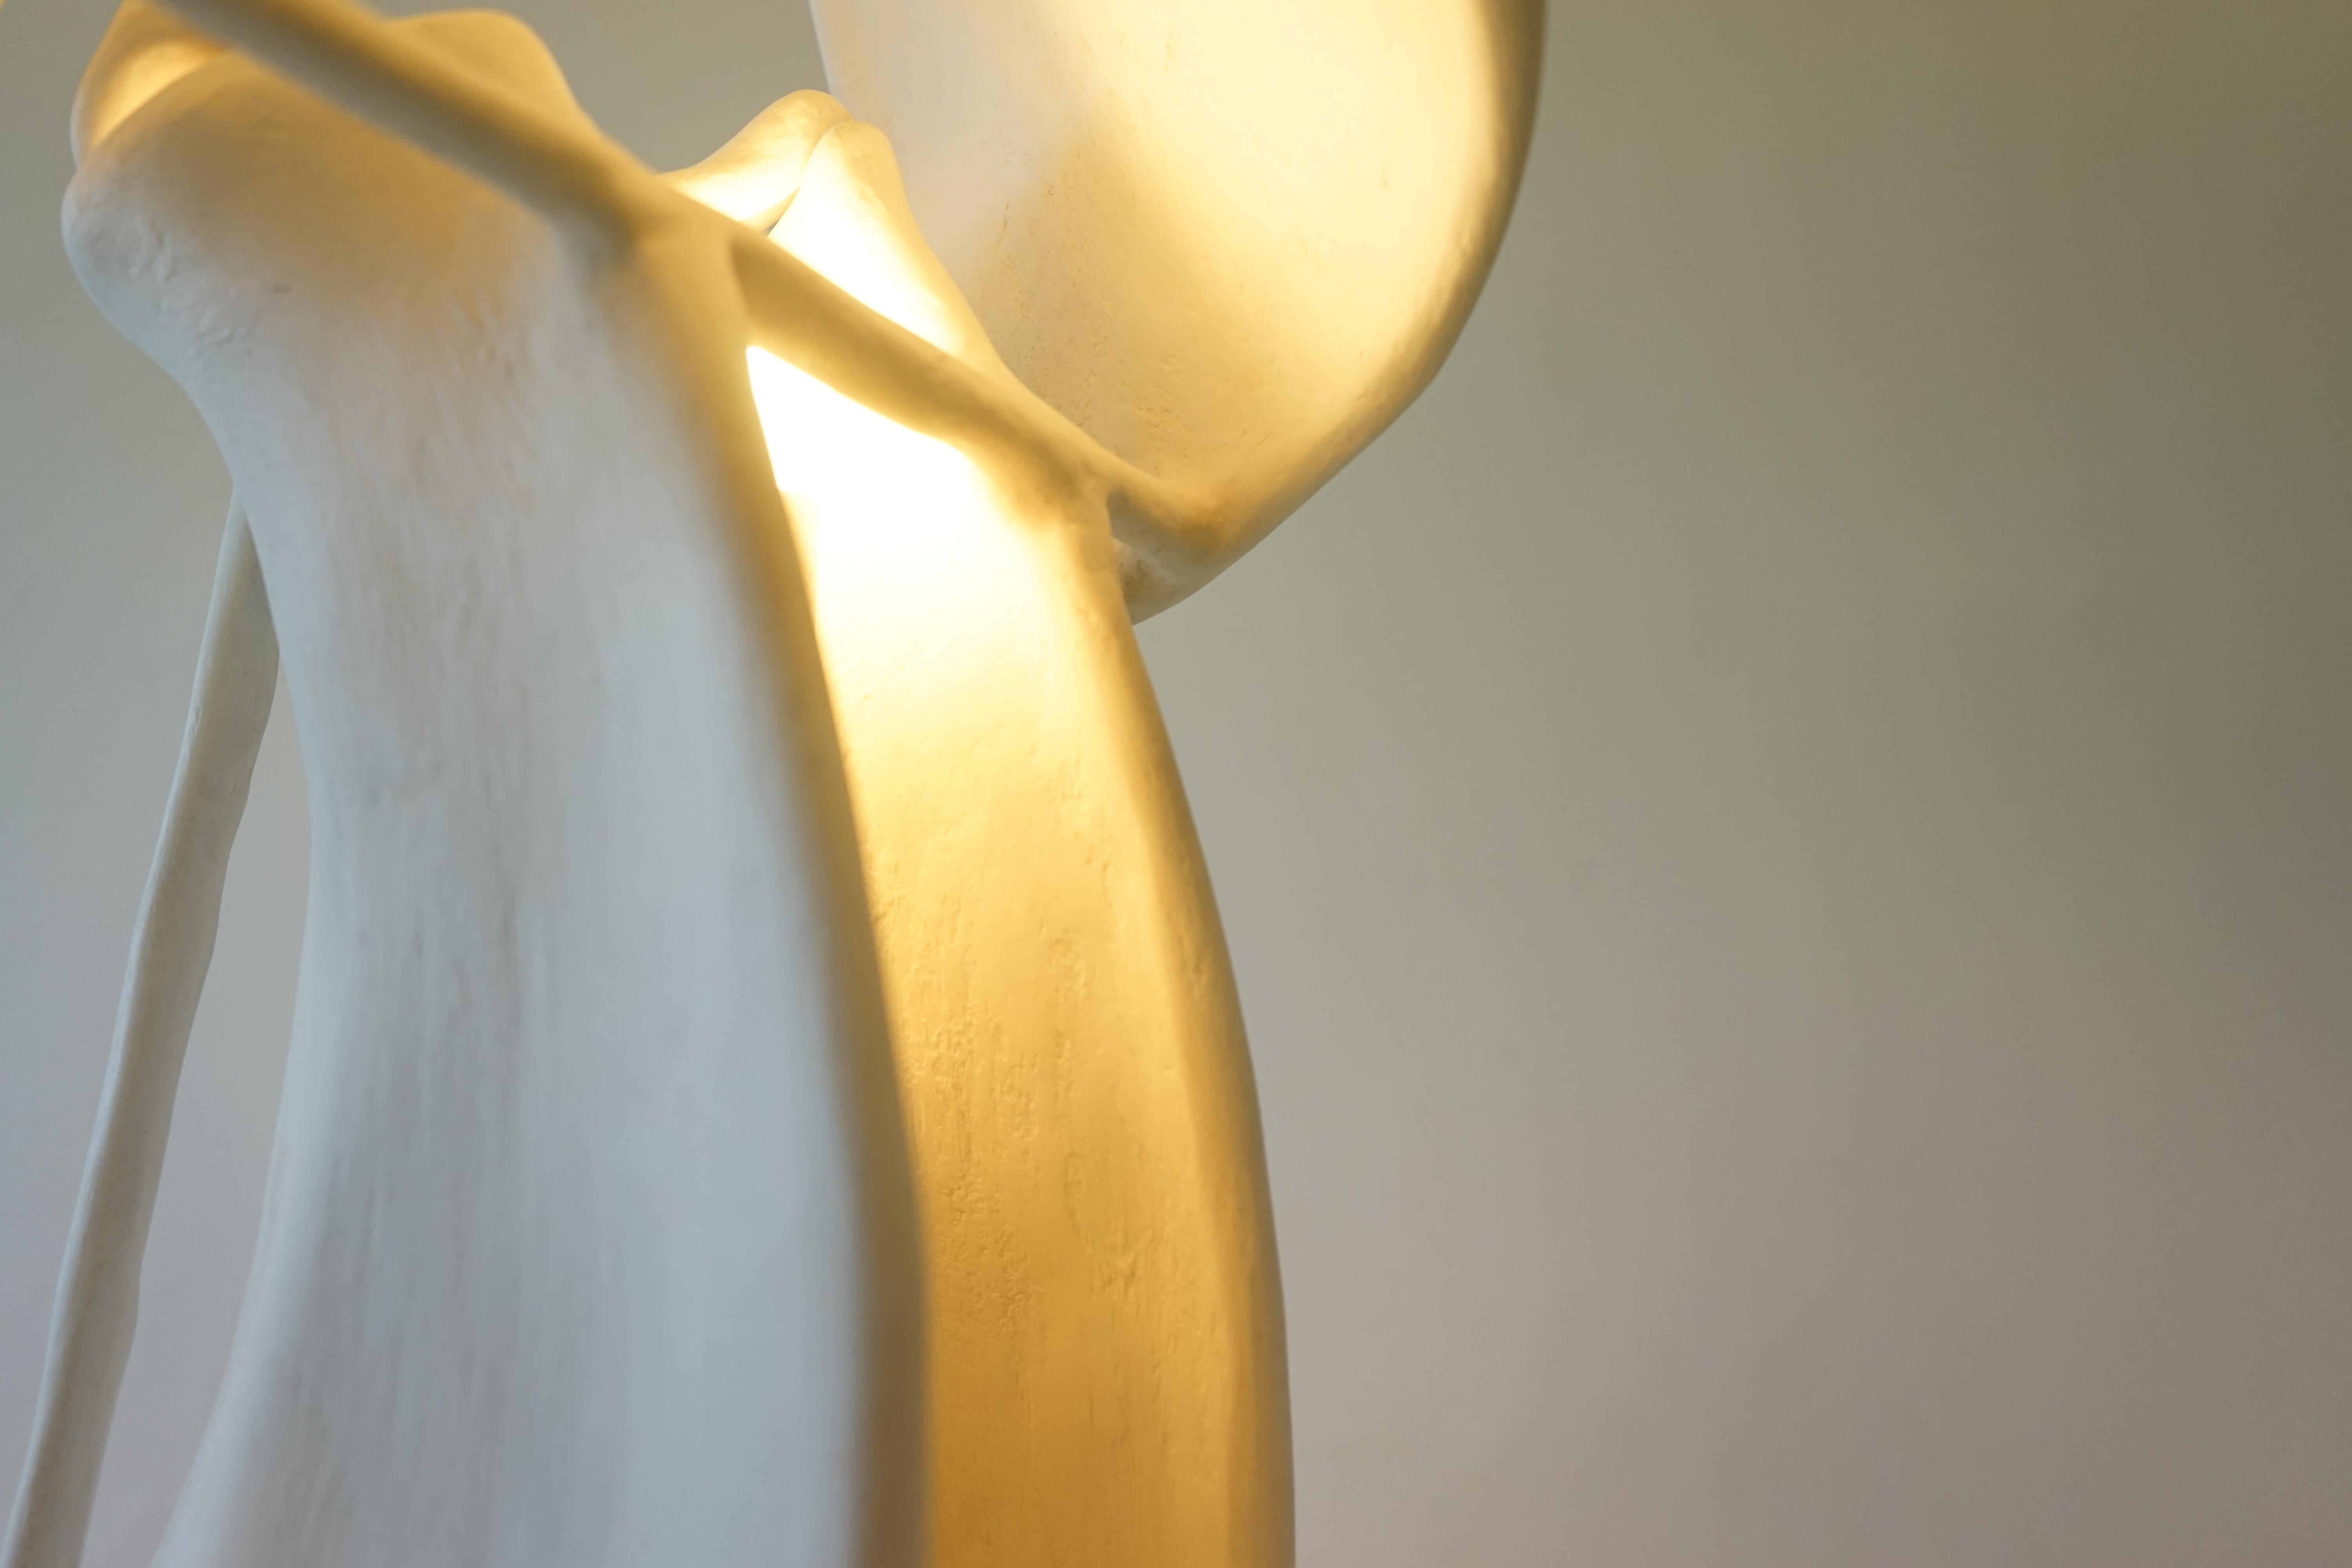 Contemporary Design White Textured Curved Sculptures Lamp by Jordan van der Ven For Sale 3